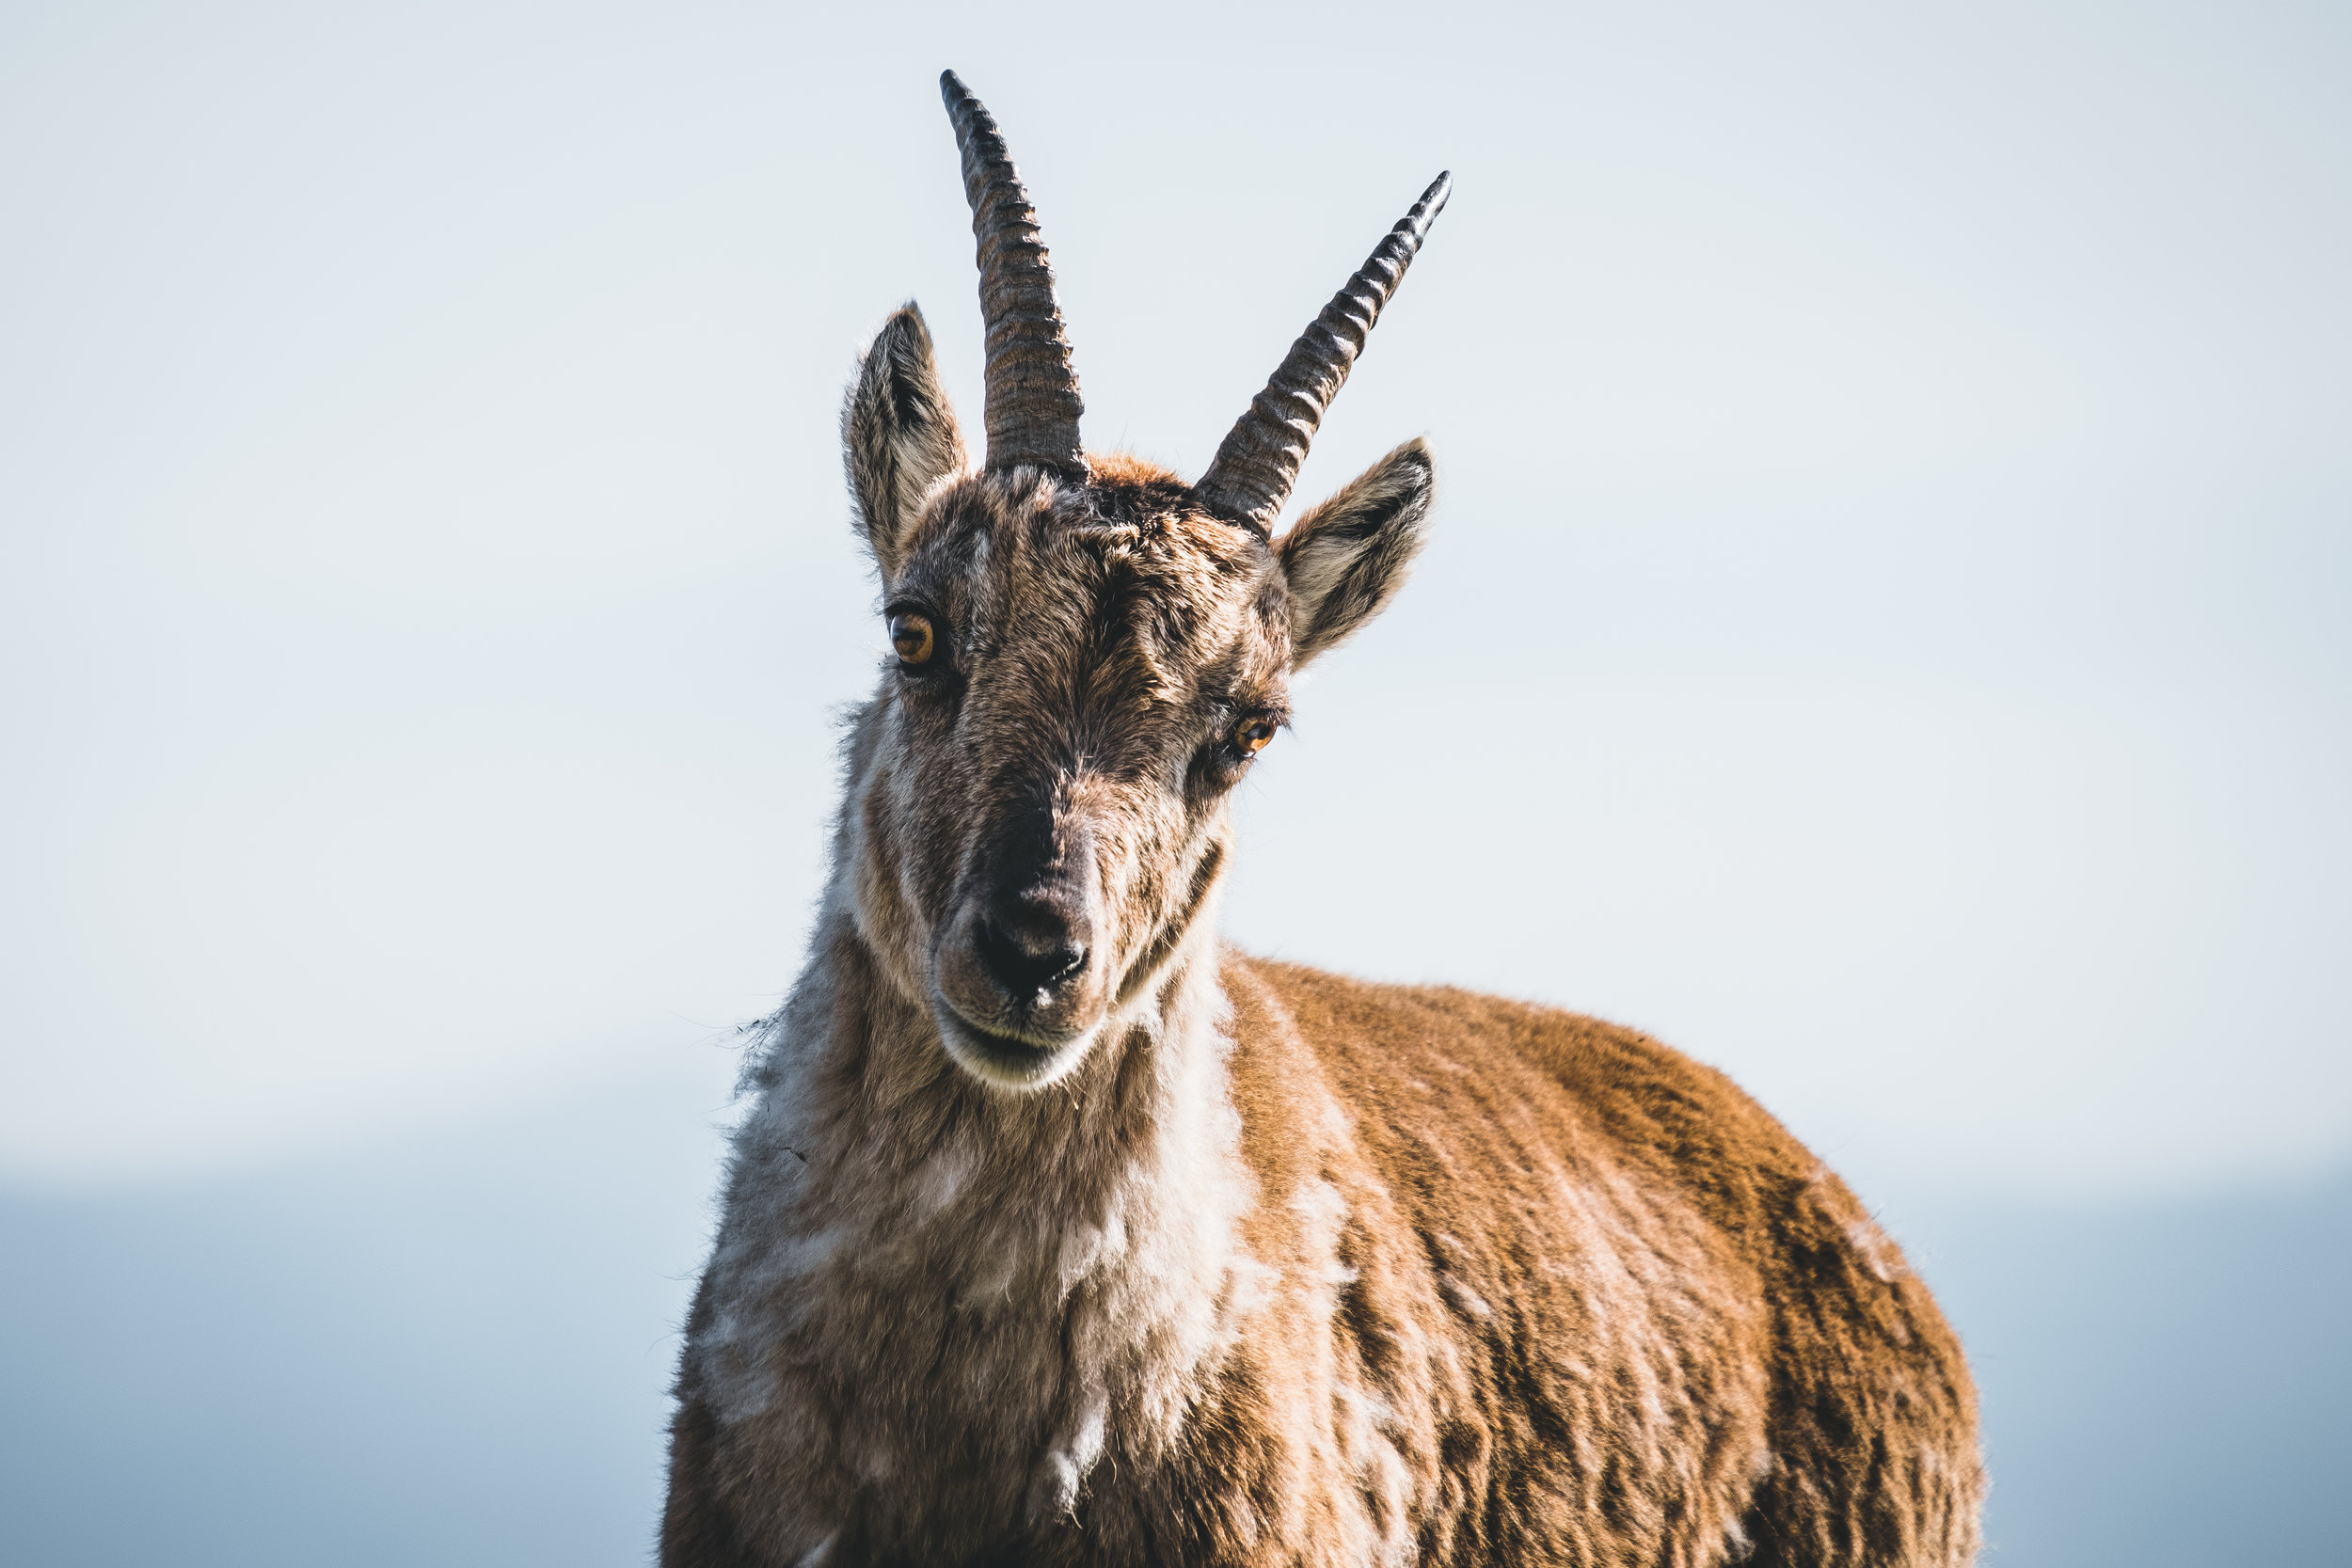  Alpensteinbock [capra ibex] | Appenzell, Switzerland 